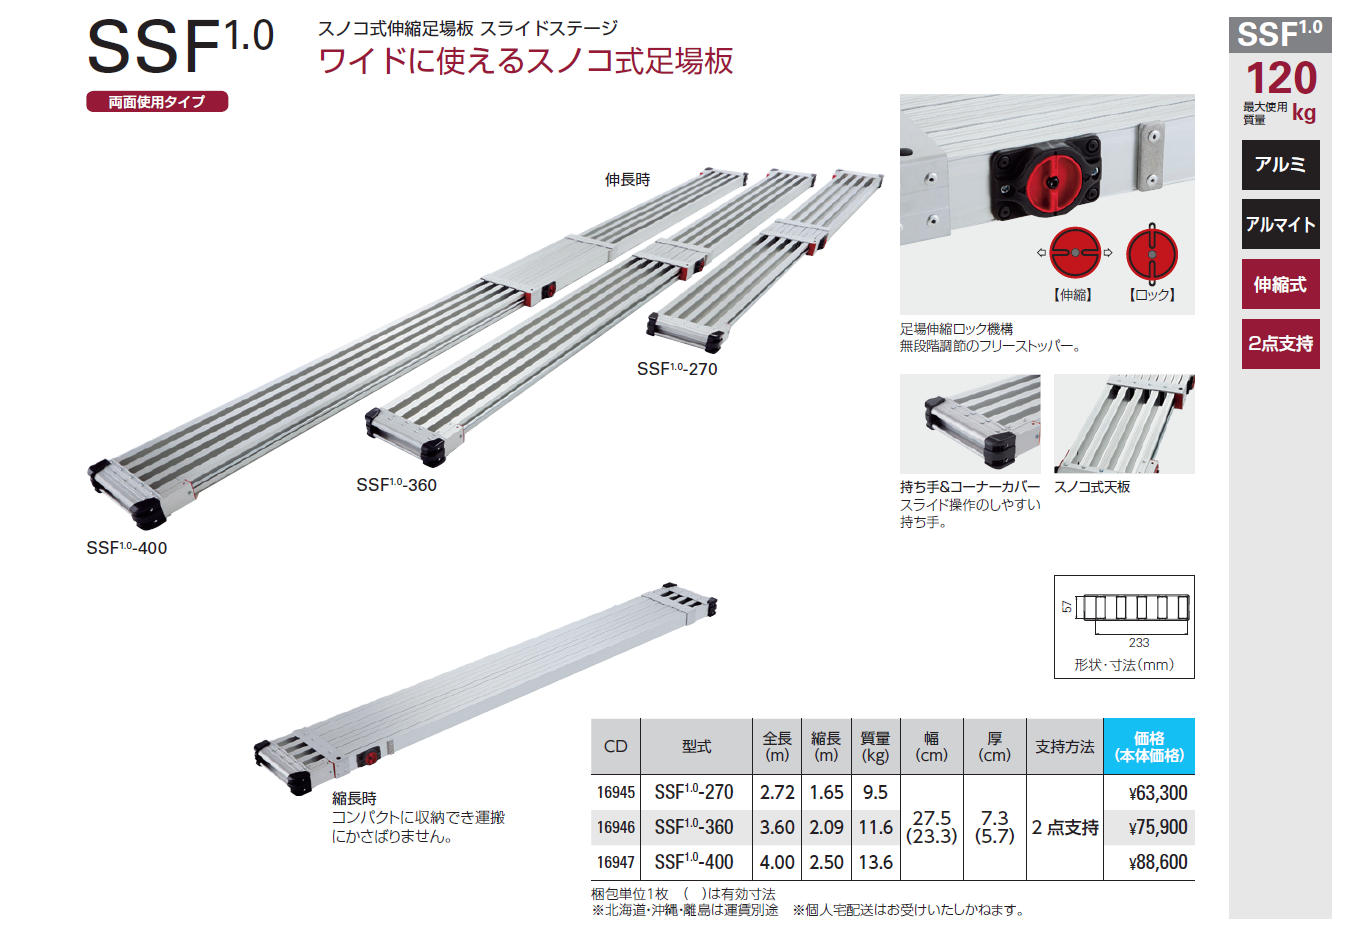 足場板 SSF1.0-270 足場板 スノコ式 2点支持 伸縮 2.72m 長谷川工業 hasegawa - 4